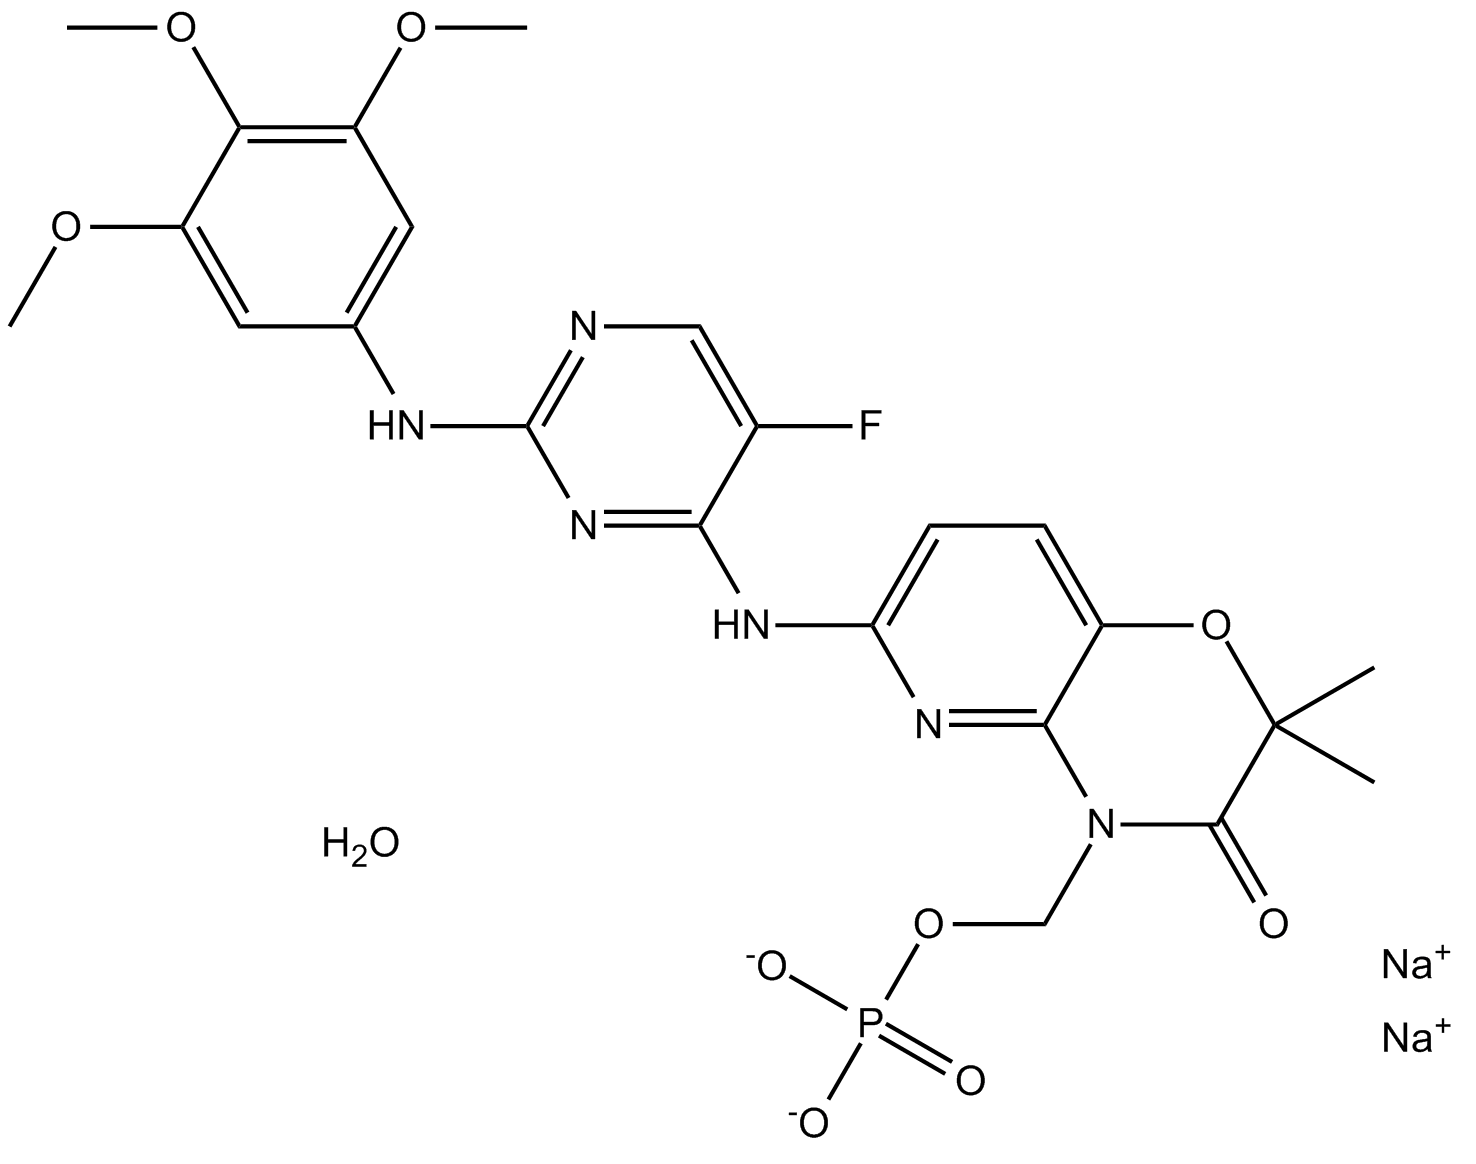 R788 disodium hexahydrate